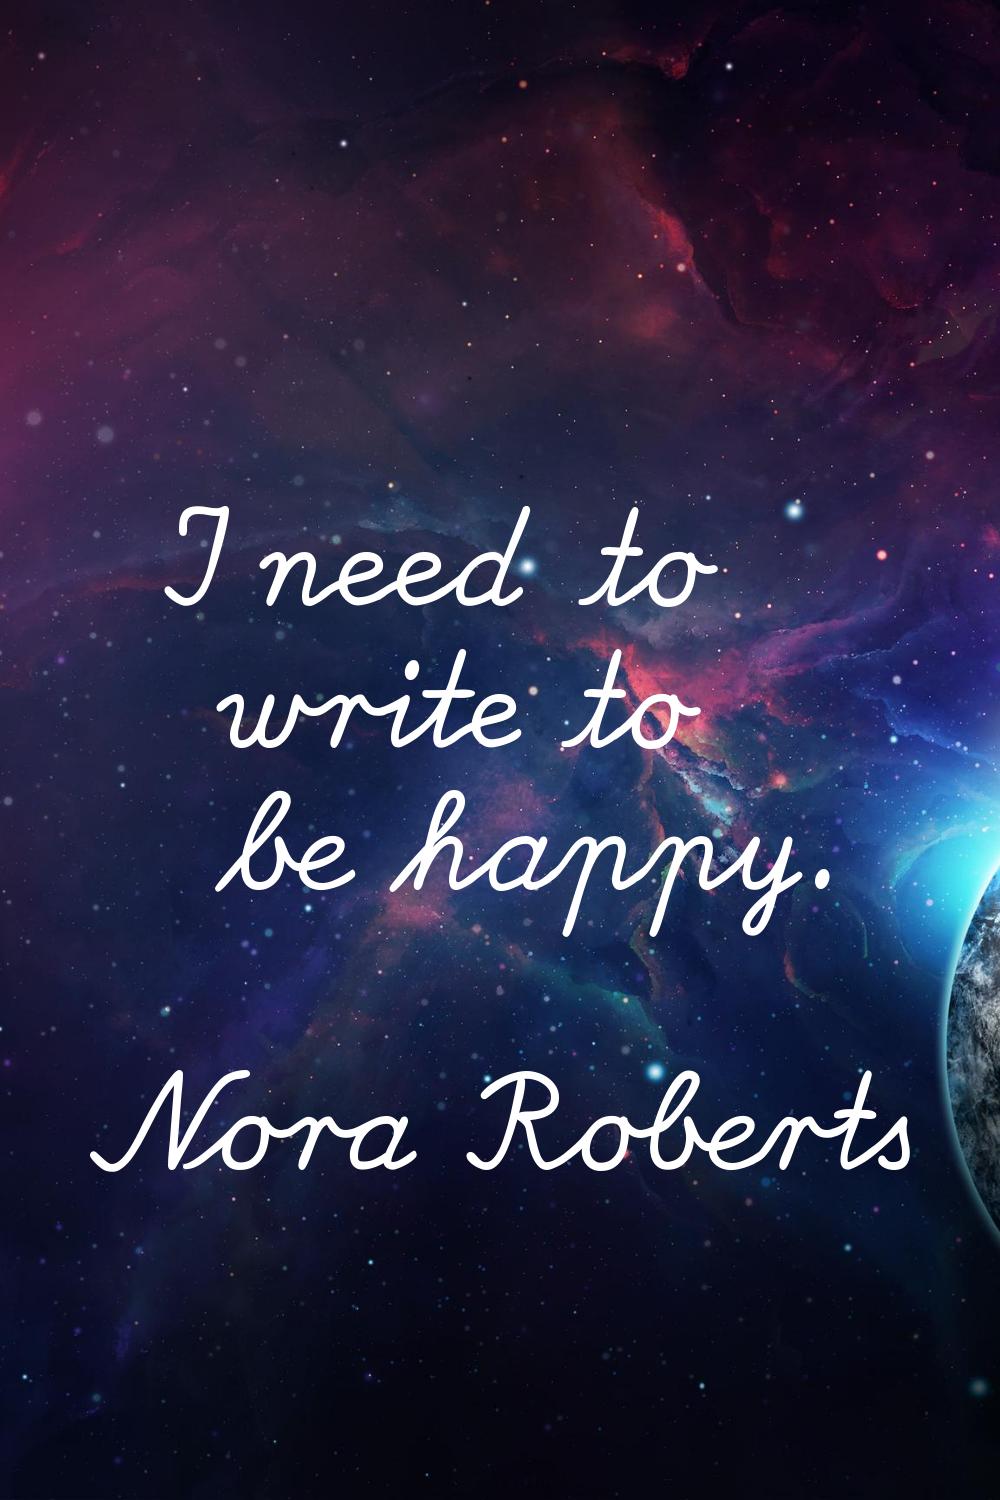 I need to write to be happy.